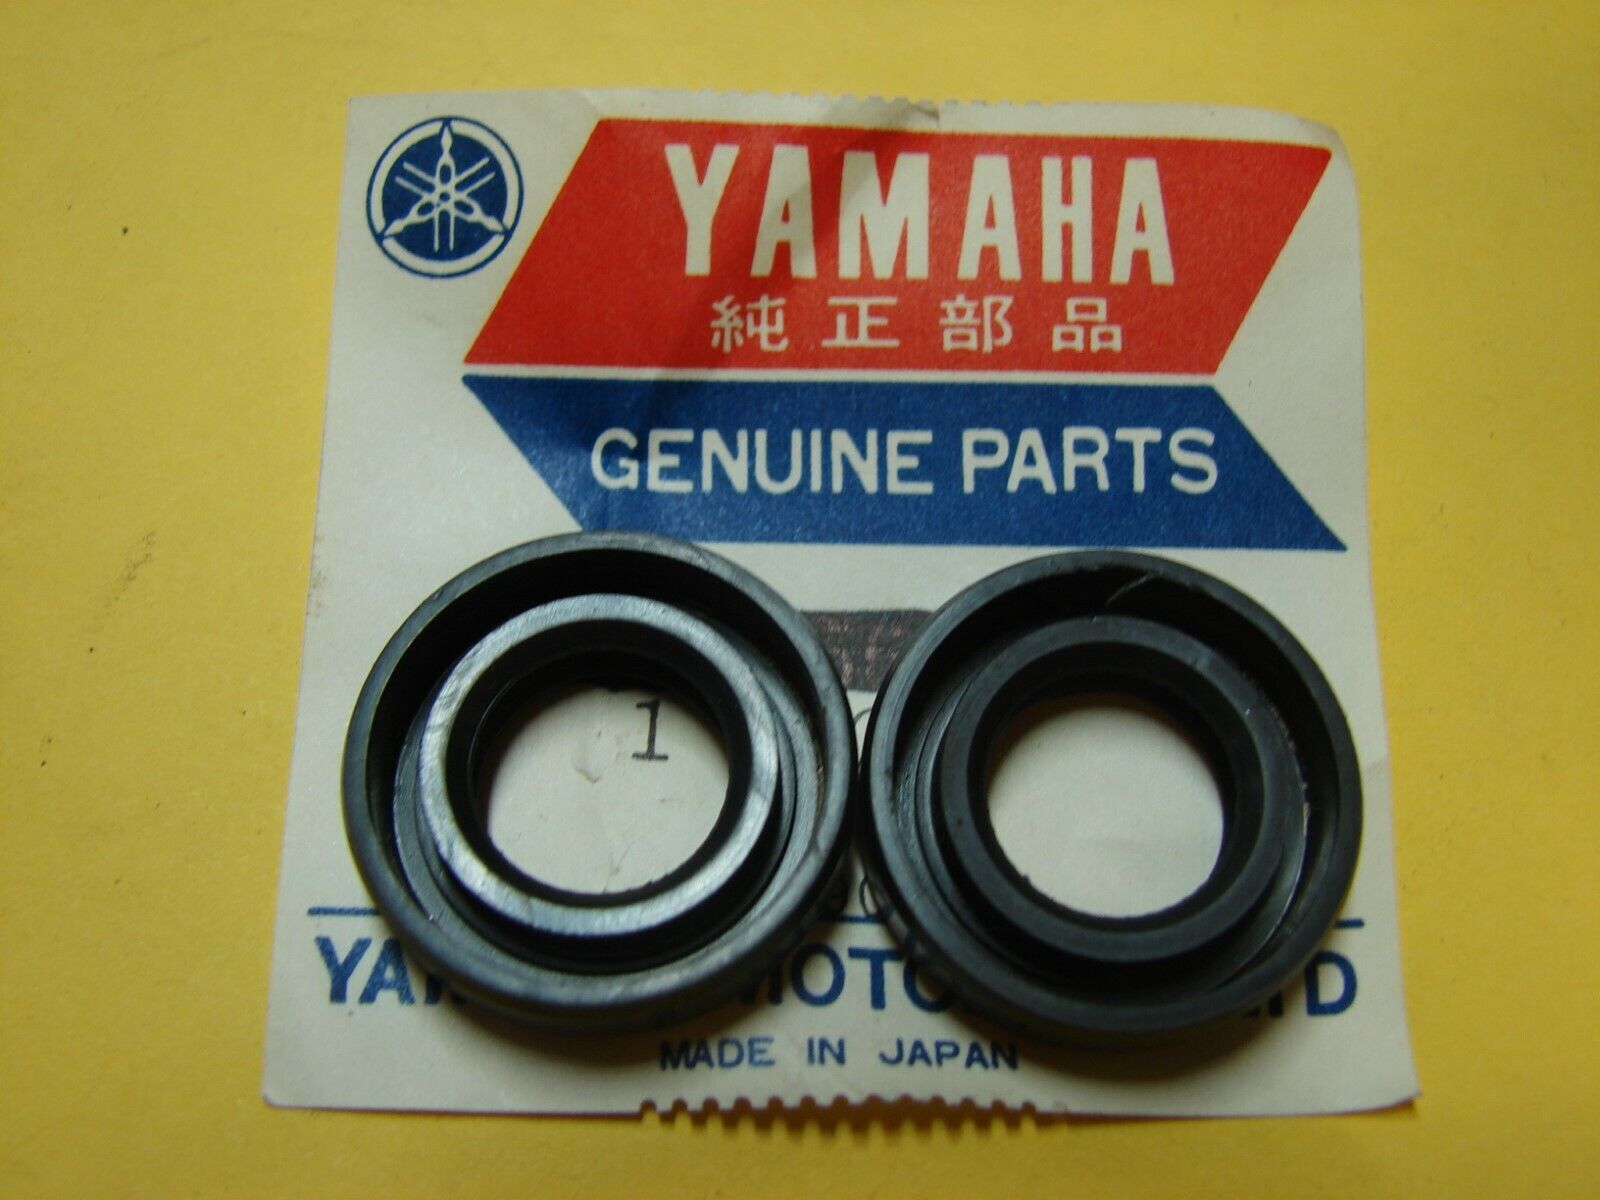 Yamaha 73-74 TX500 75-78 XS500 Contact Breaker Oil Seal 93102-14107 new QTY 2